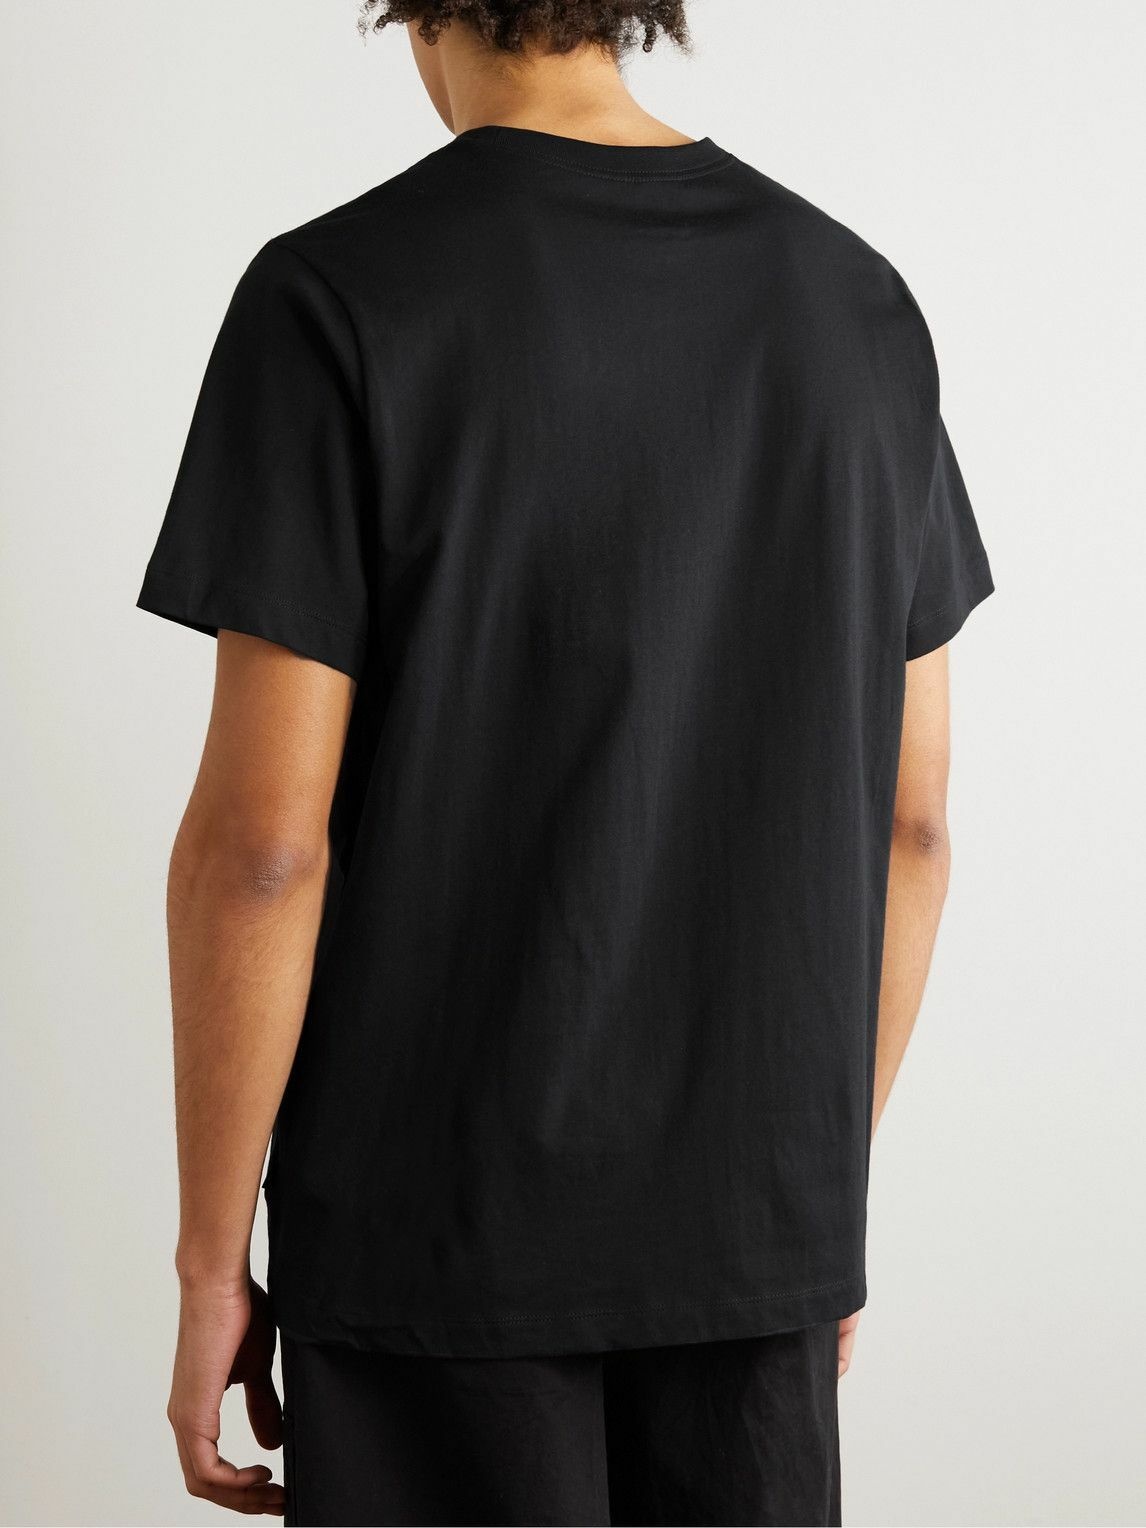 Nike - NSW Logo-Print Cotton-Jersey T-Shirt - Black Nike